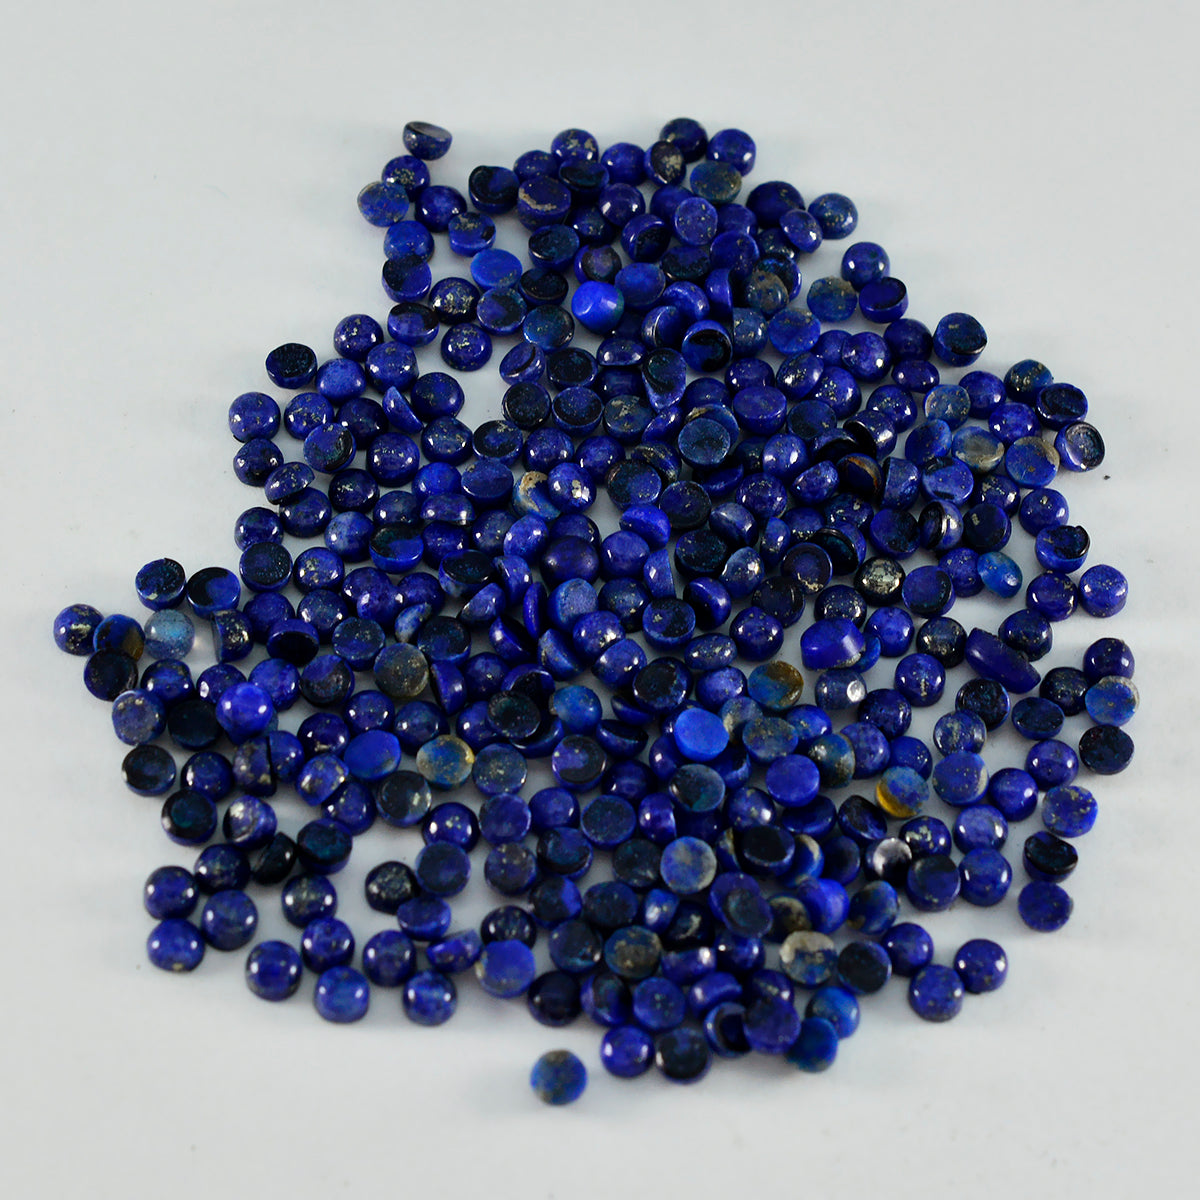 Riyogems 1PC Blue Lapis Lazuli Cabochon 3x3 mm Round Shape pretty Quality Stone